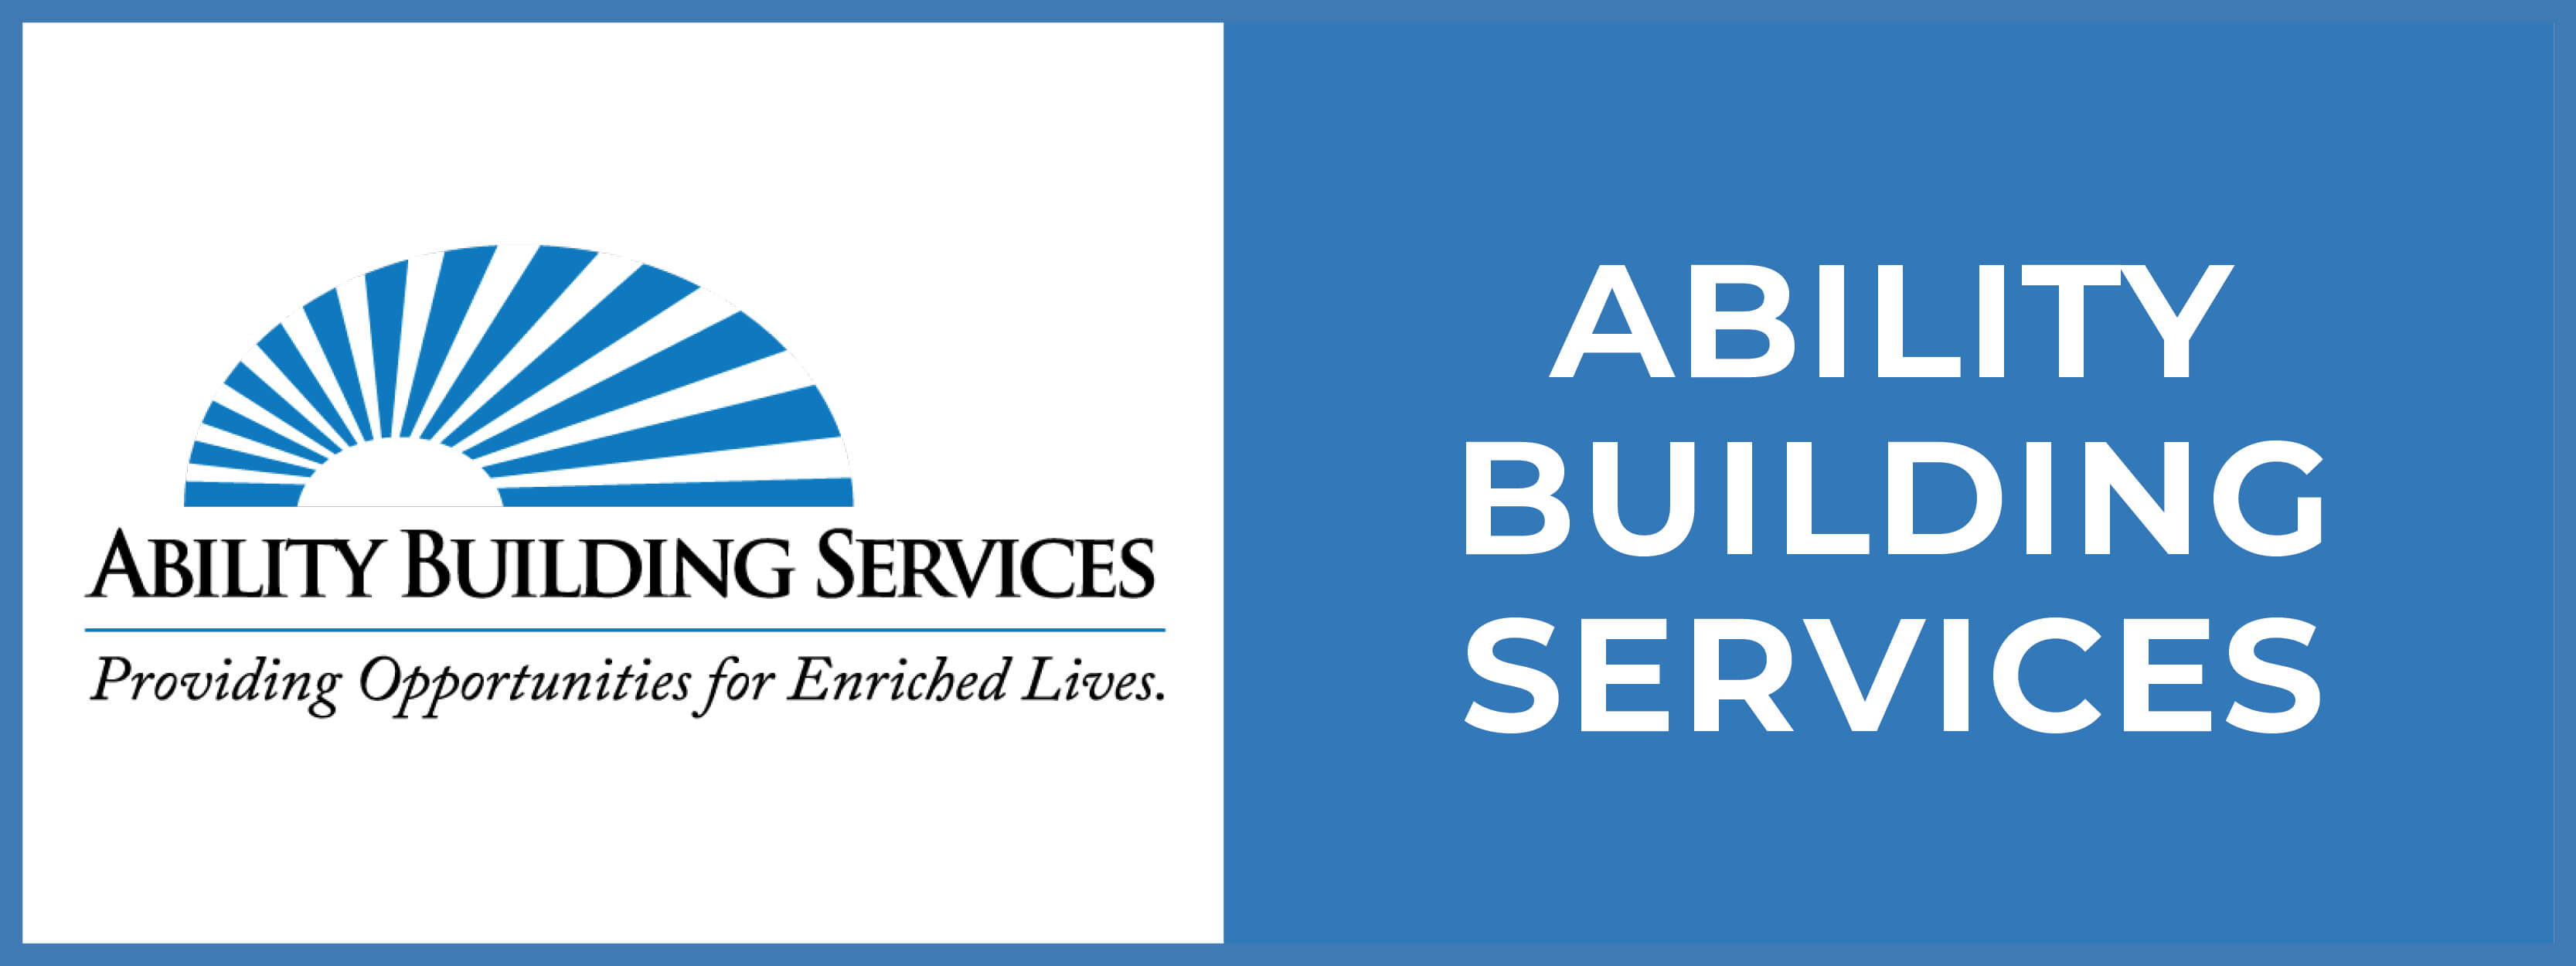 Ability Building Services button